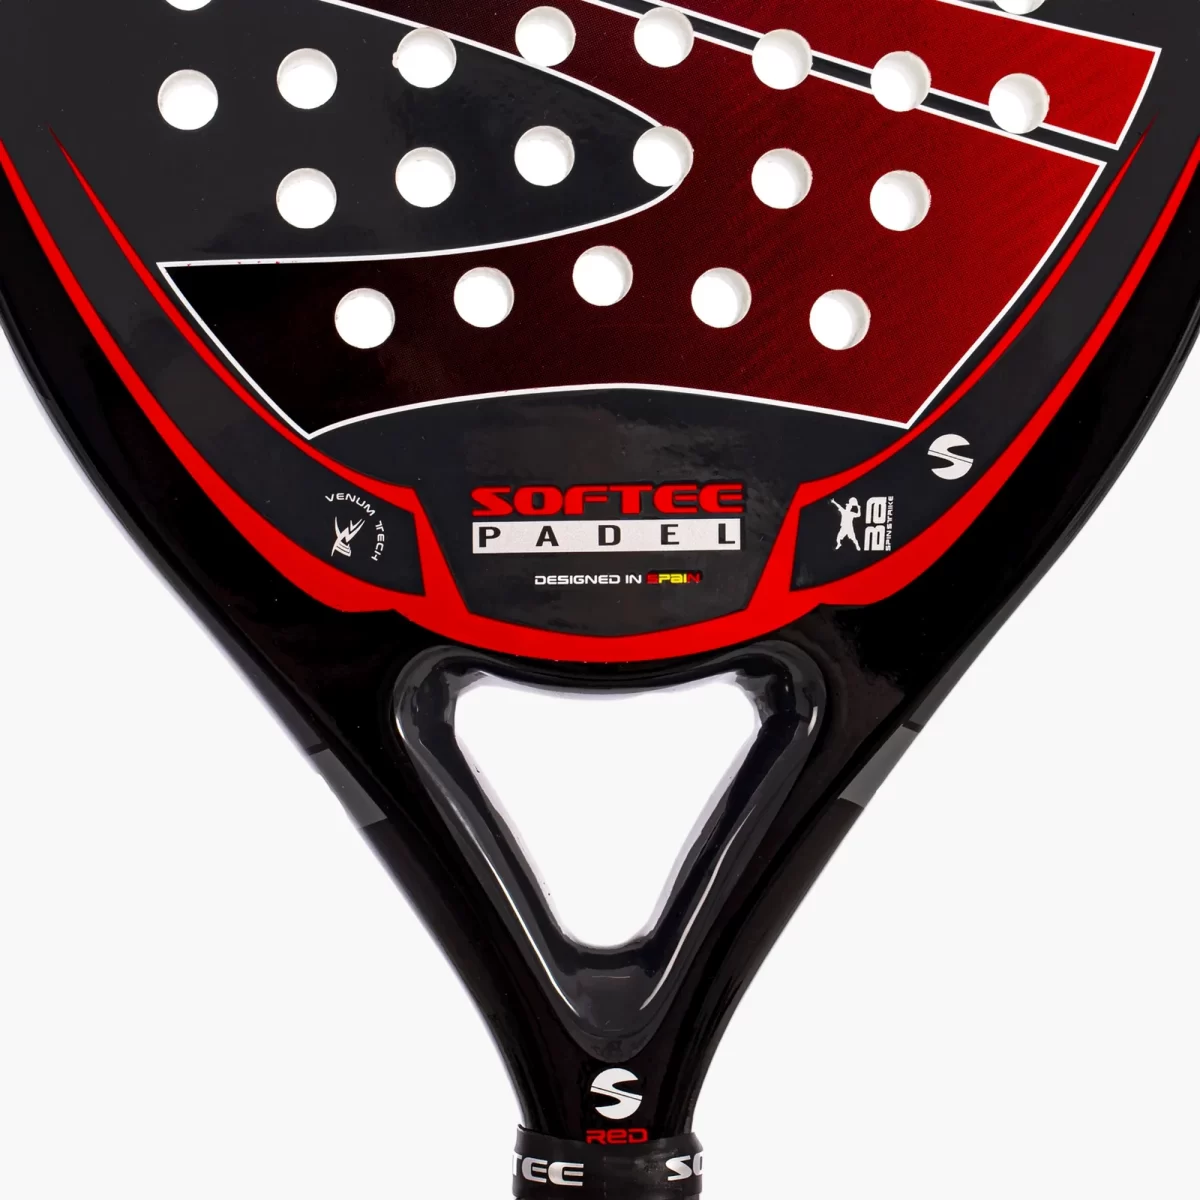 SOFTEE Padel Racket Pro Master Evolution Red